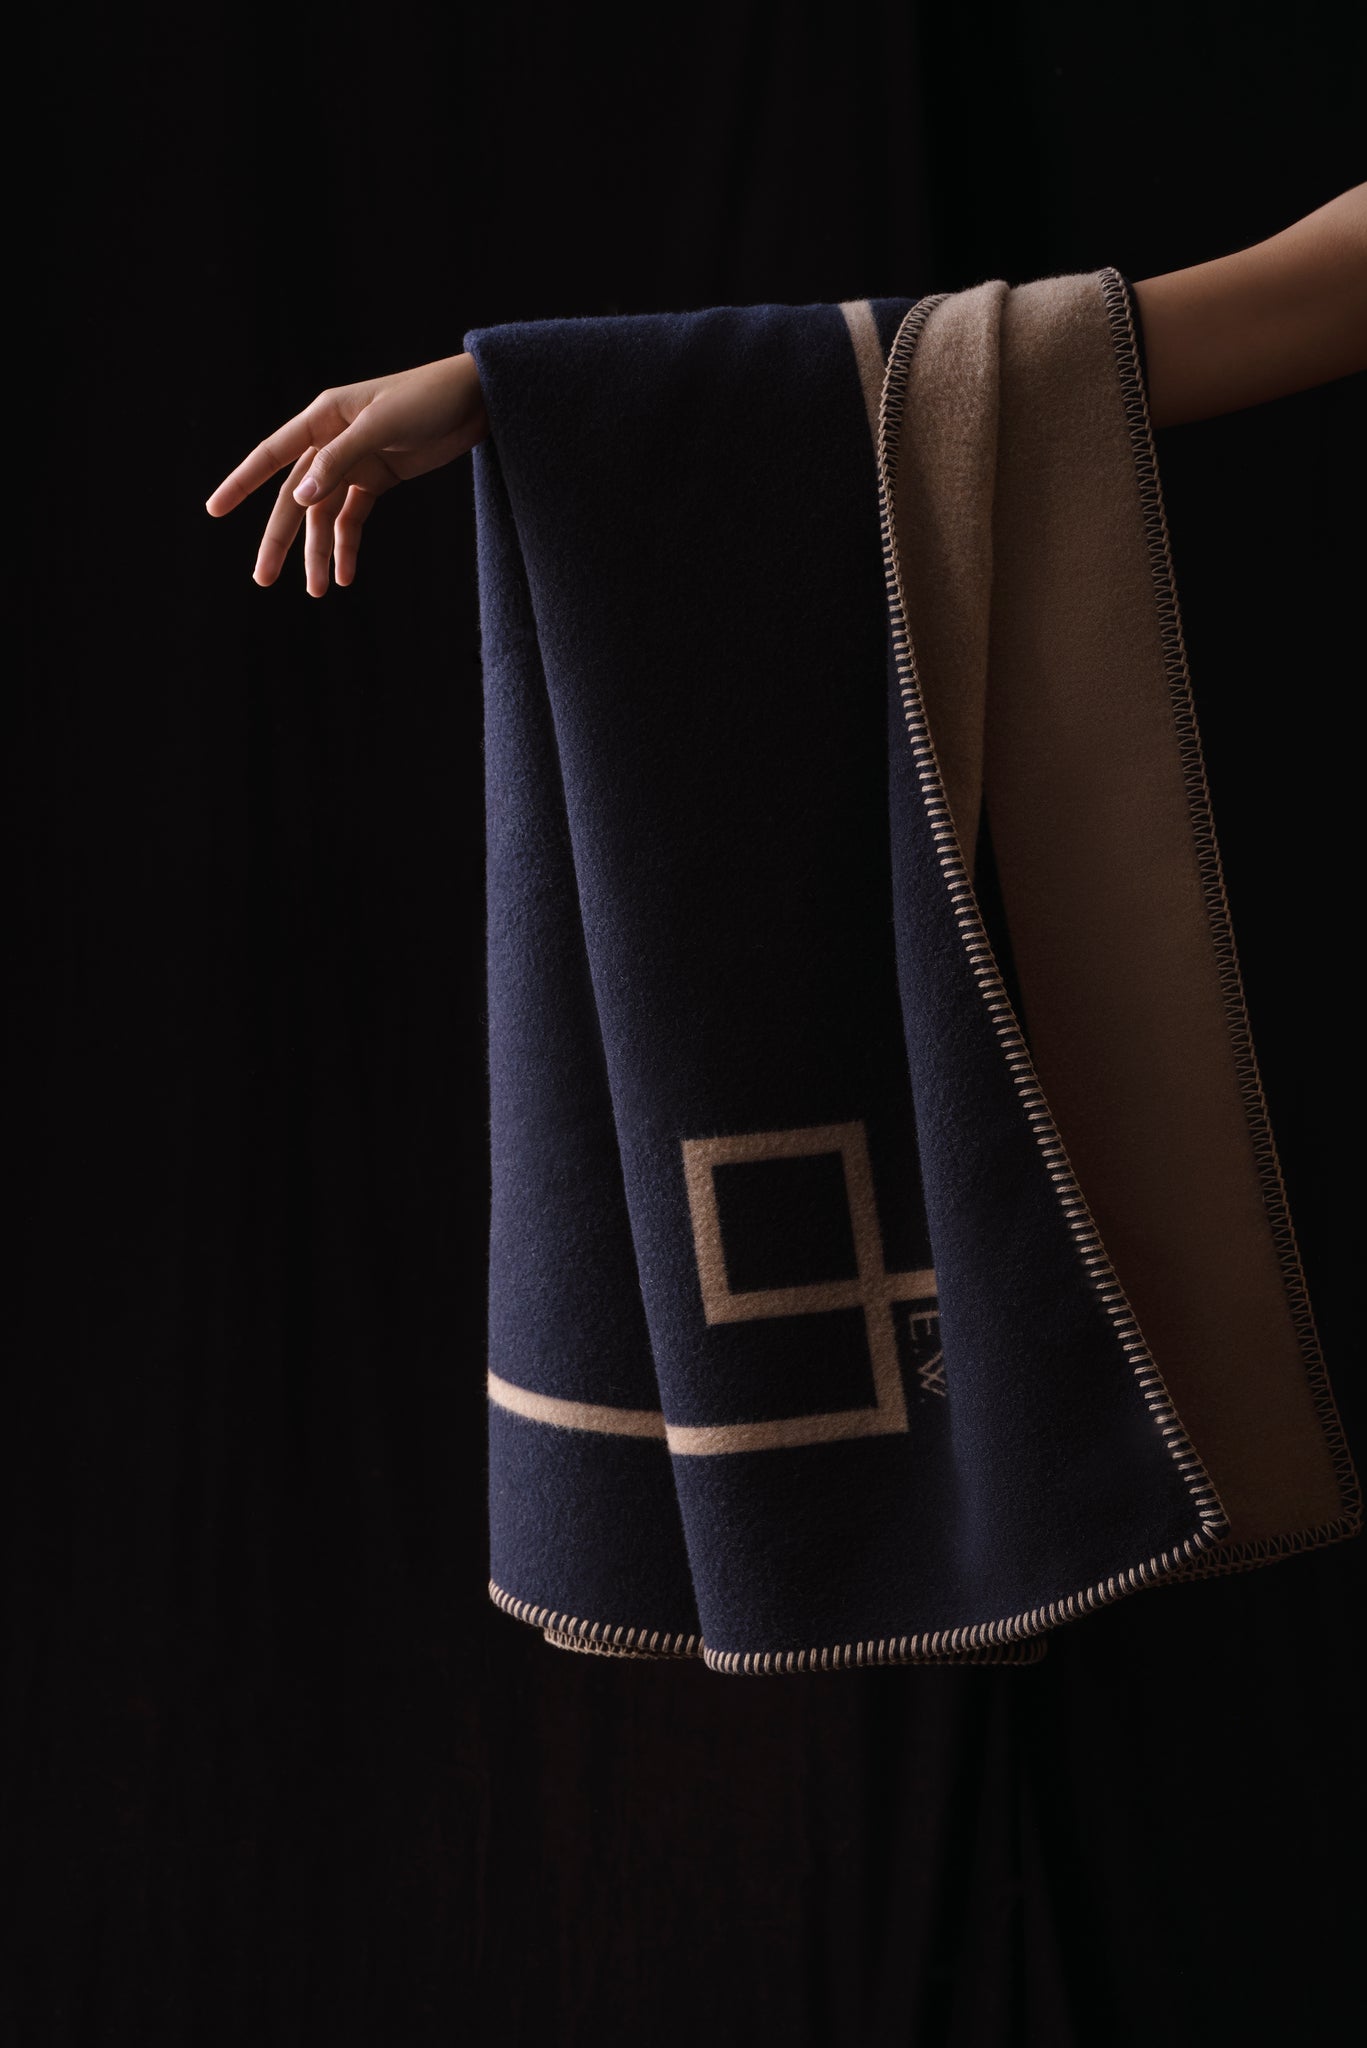 Roma Geometric Detail Blanket in Camel & Navy Wool | Emilia Wickstead